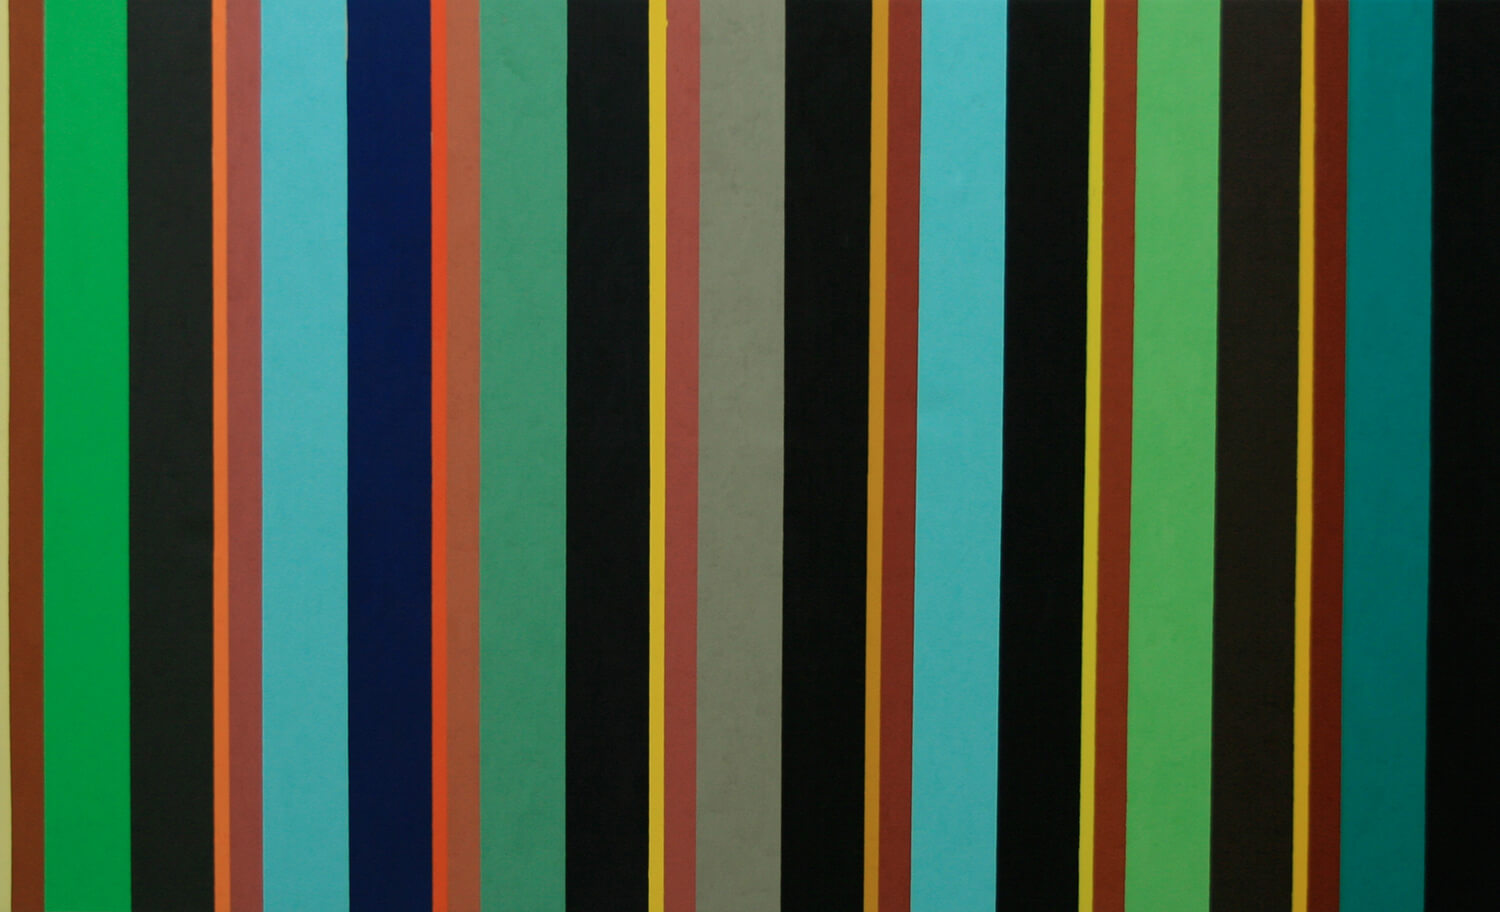 Peter Benkert, Colour Series No. 17, 1990s, acrylic on canvas, 140 x 230 cm